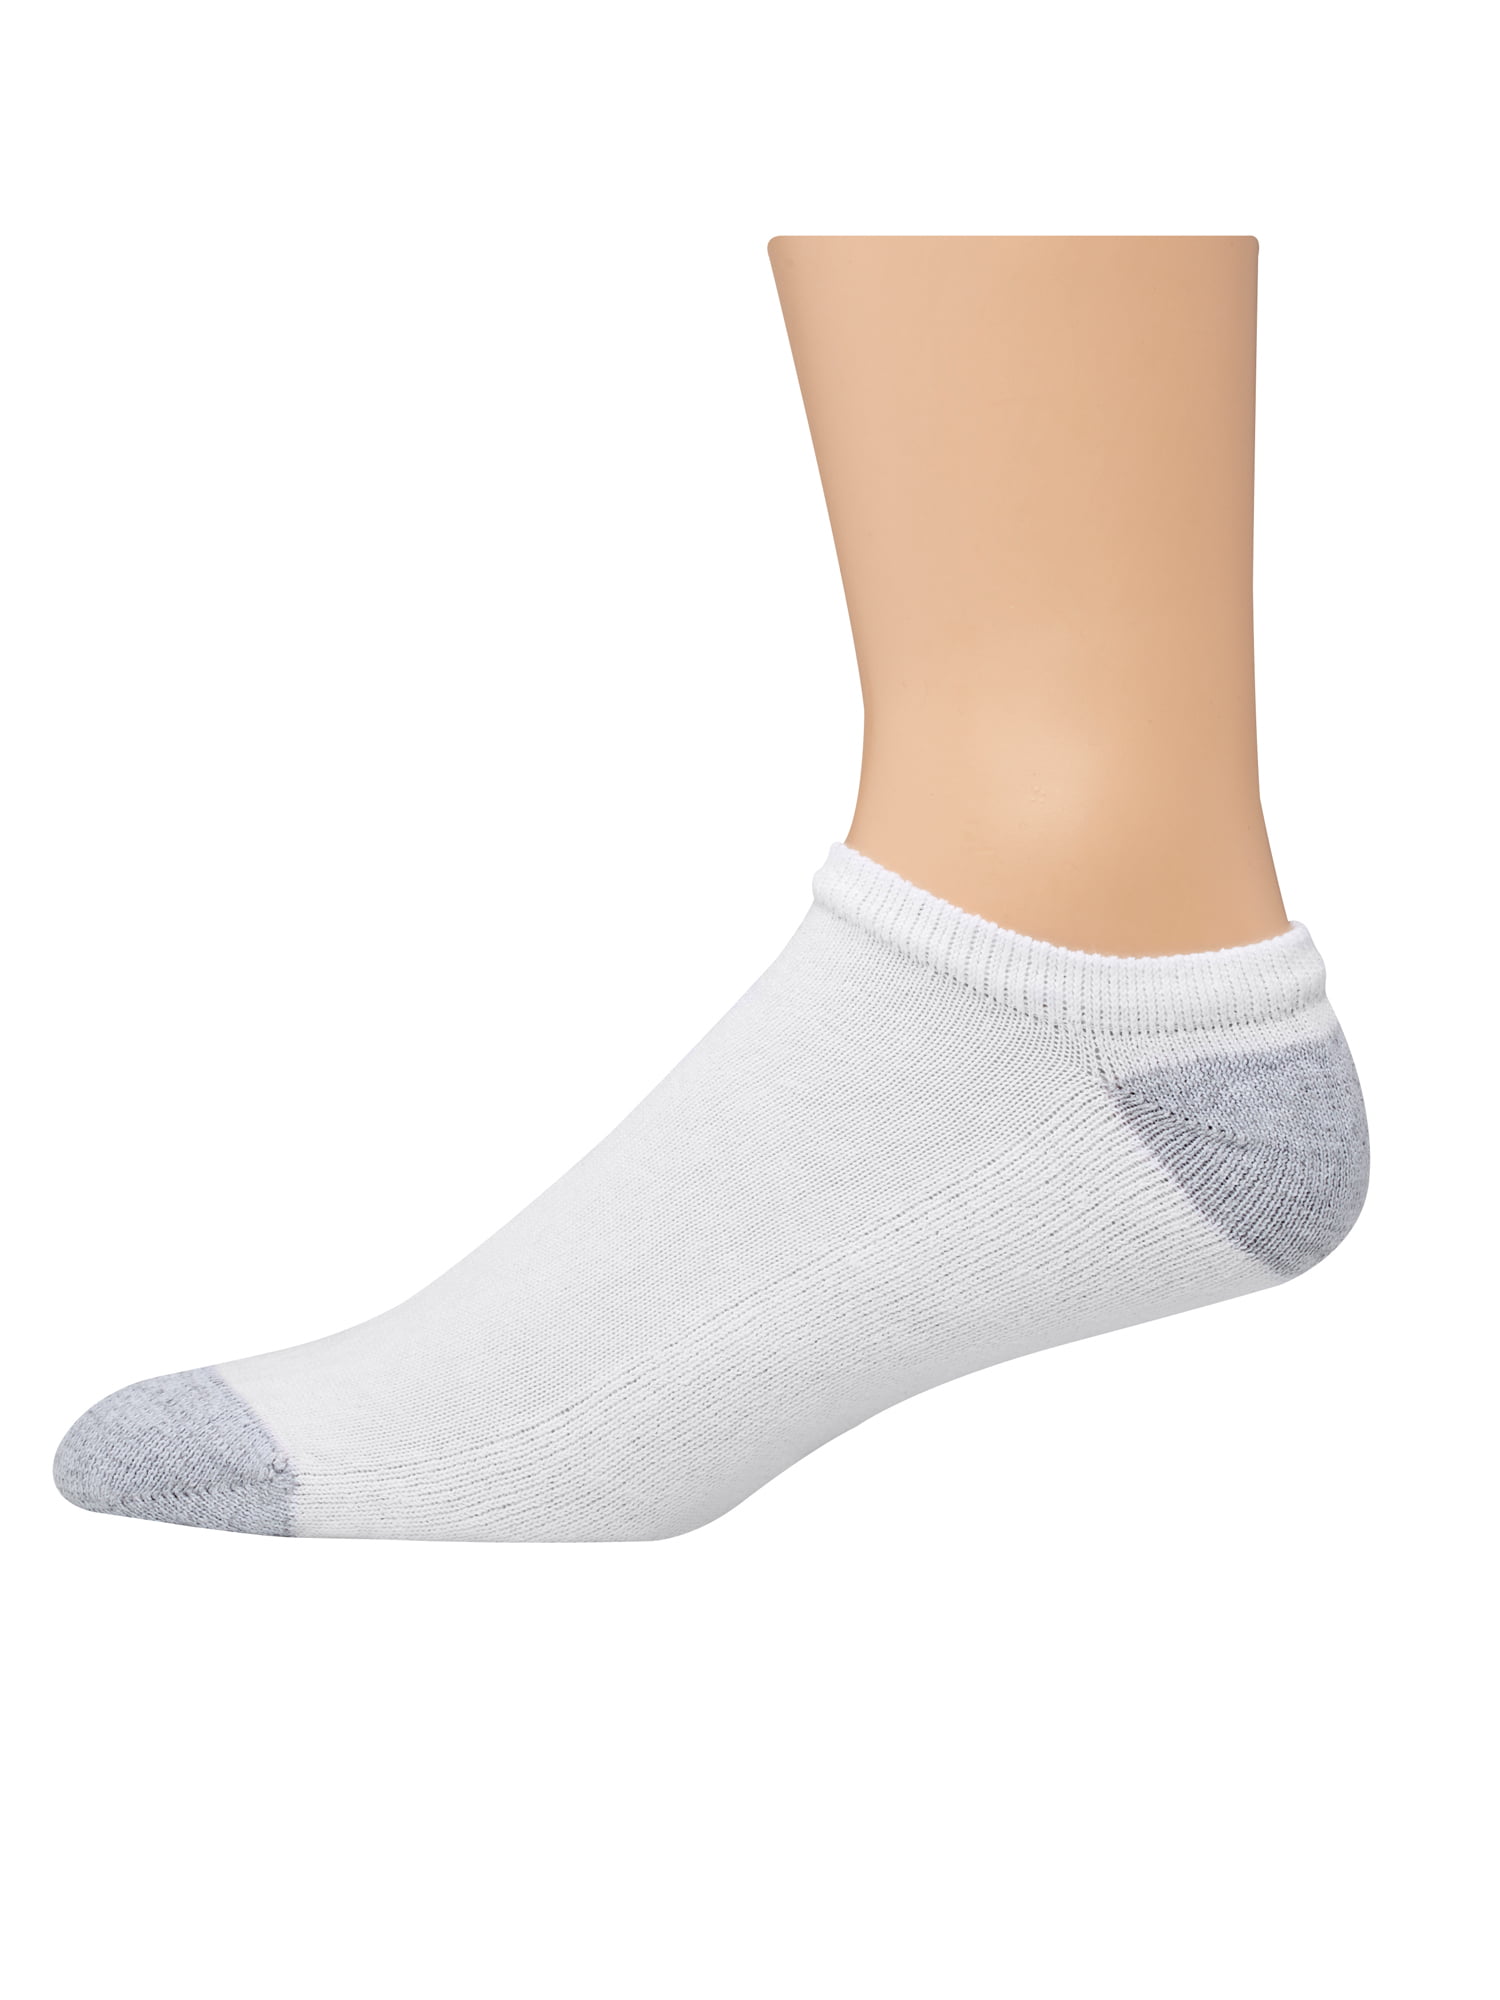 Hanes - Hanes Men's Half Cushion White No Show Socks, 20 Pack - Walmart ...